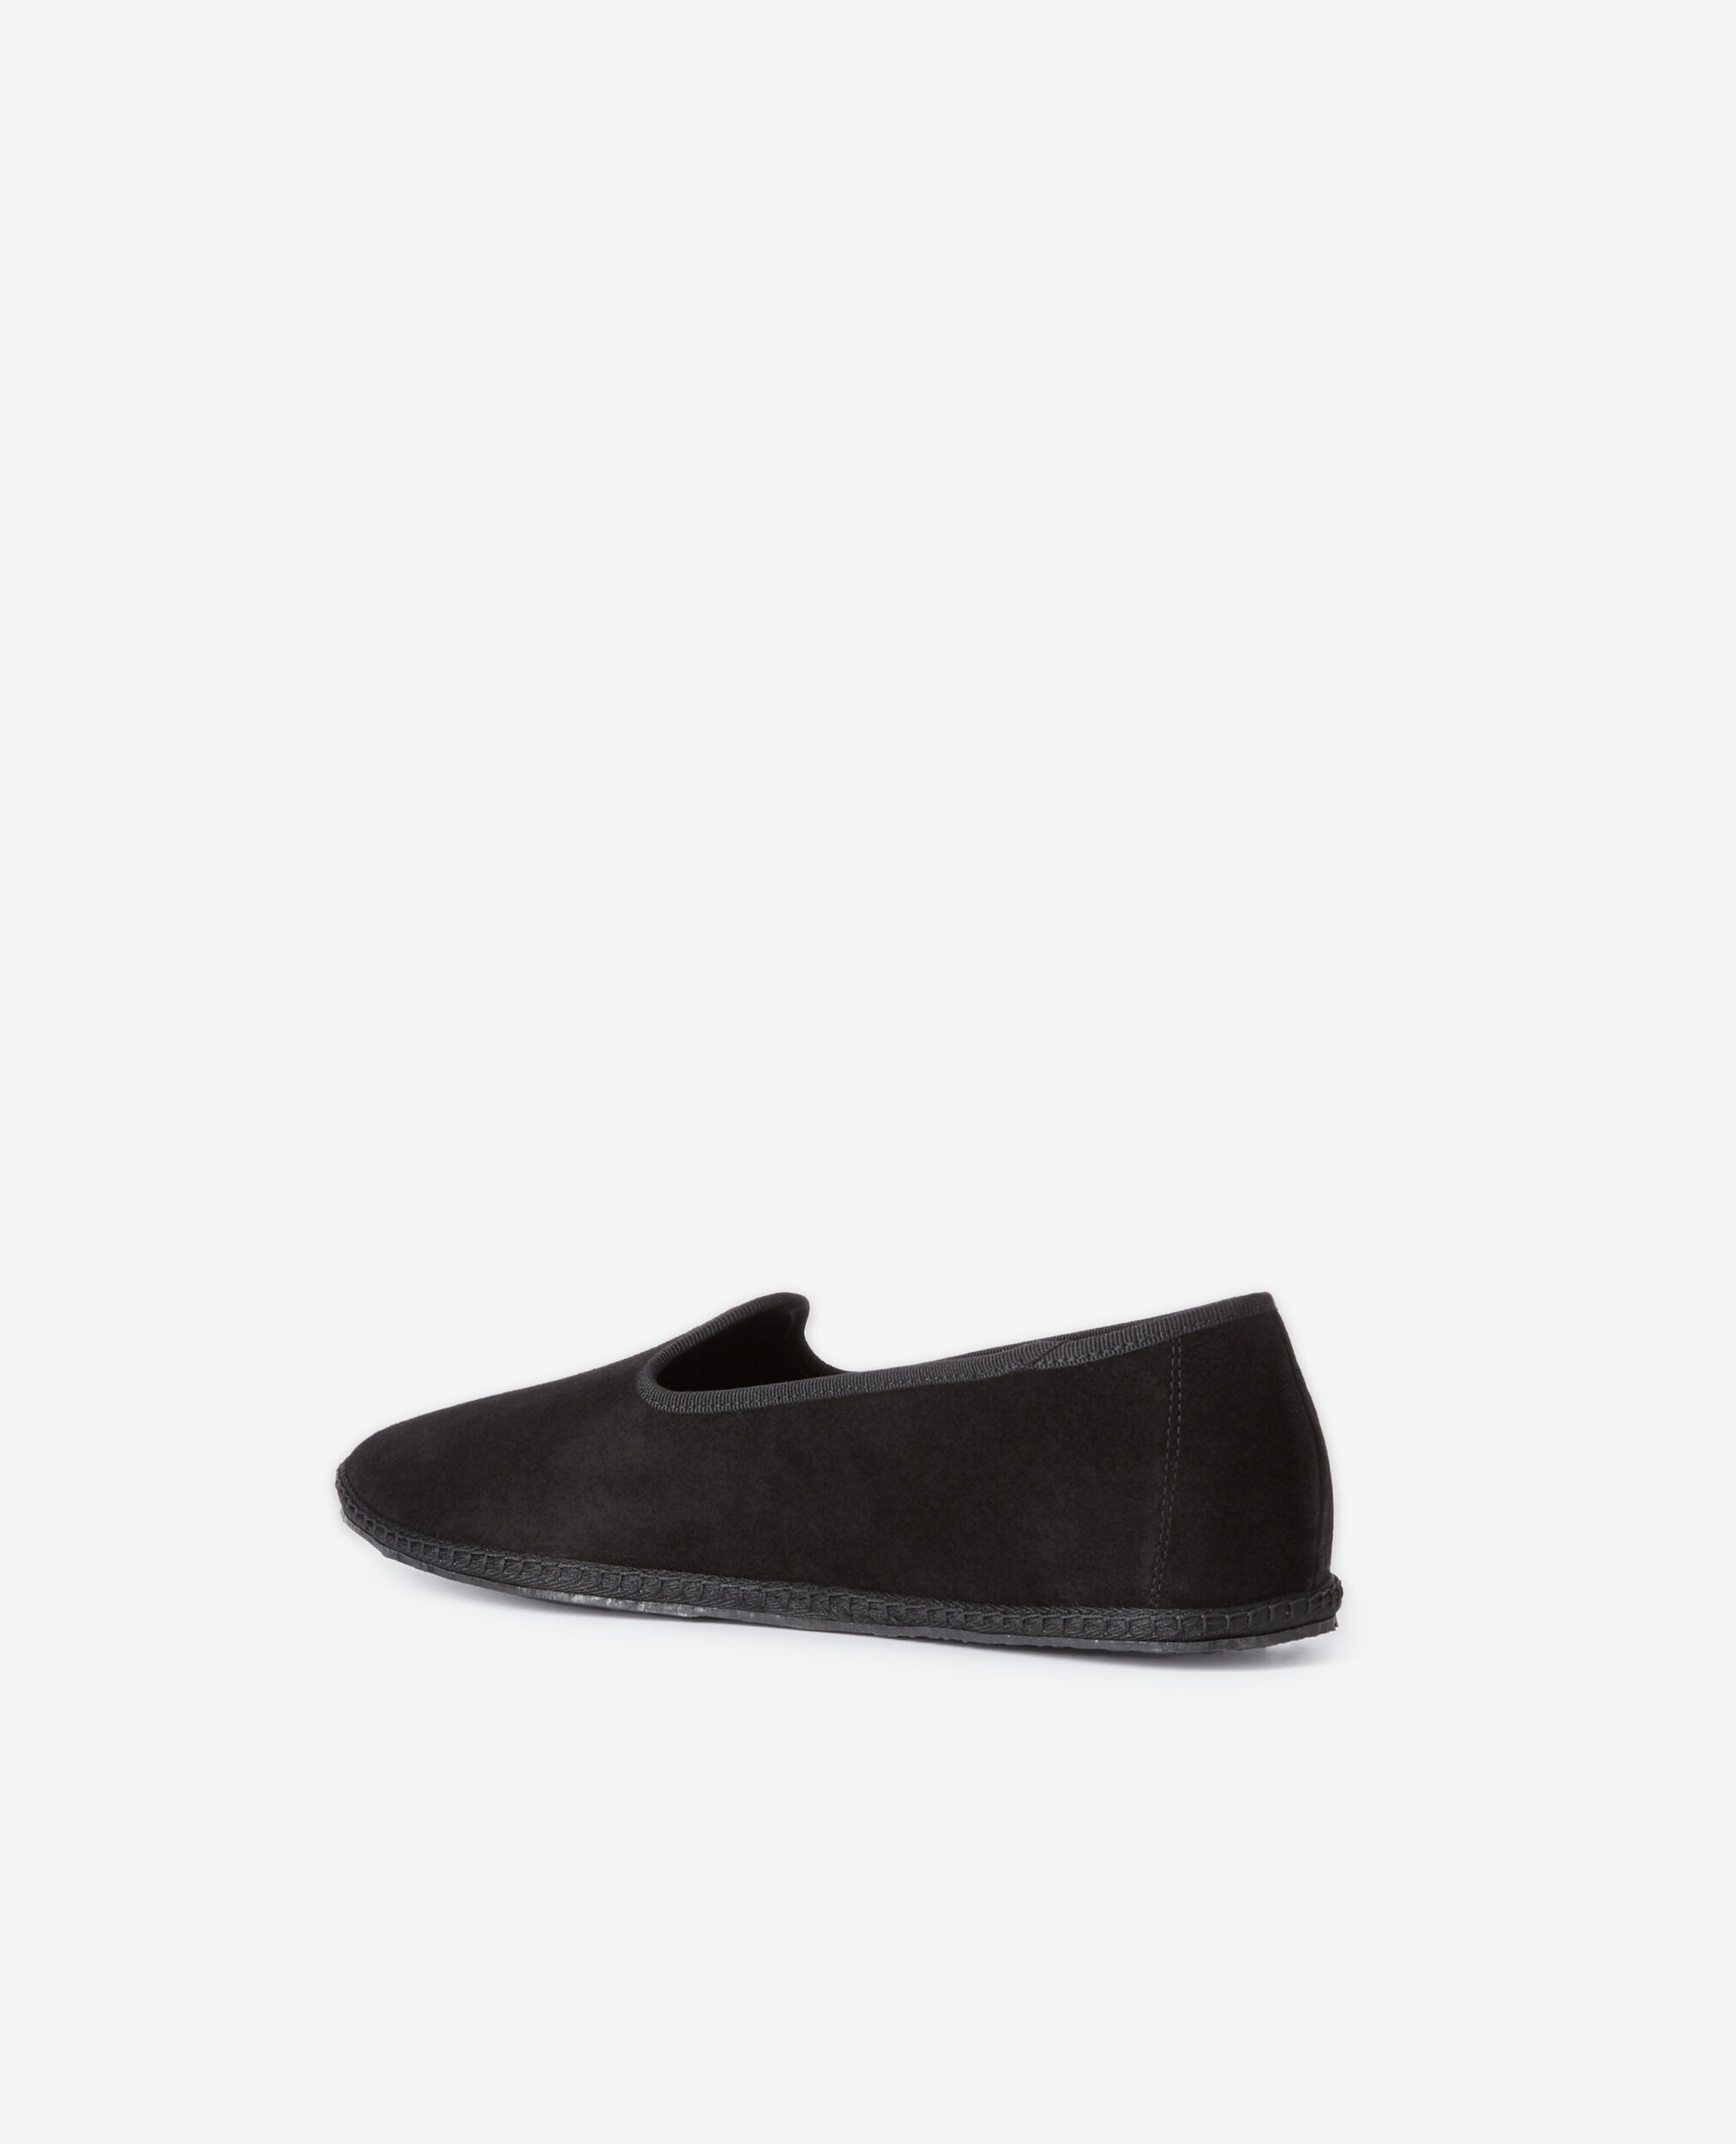 Black leather slippers, BLACK, hi-res image number null